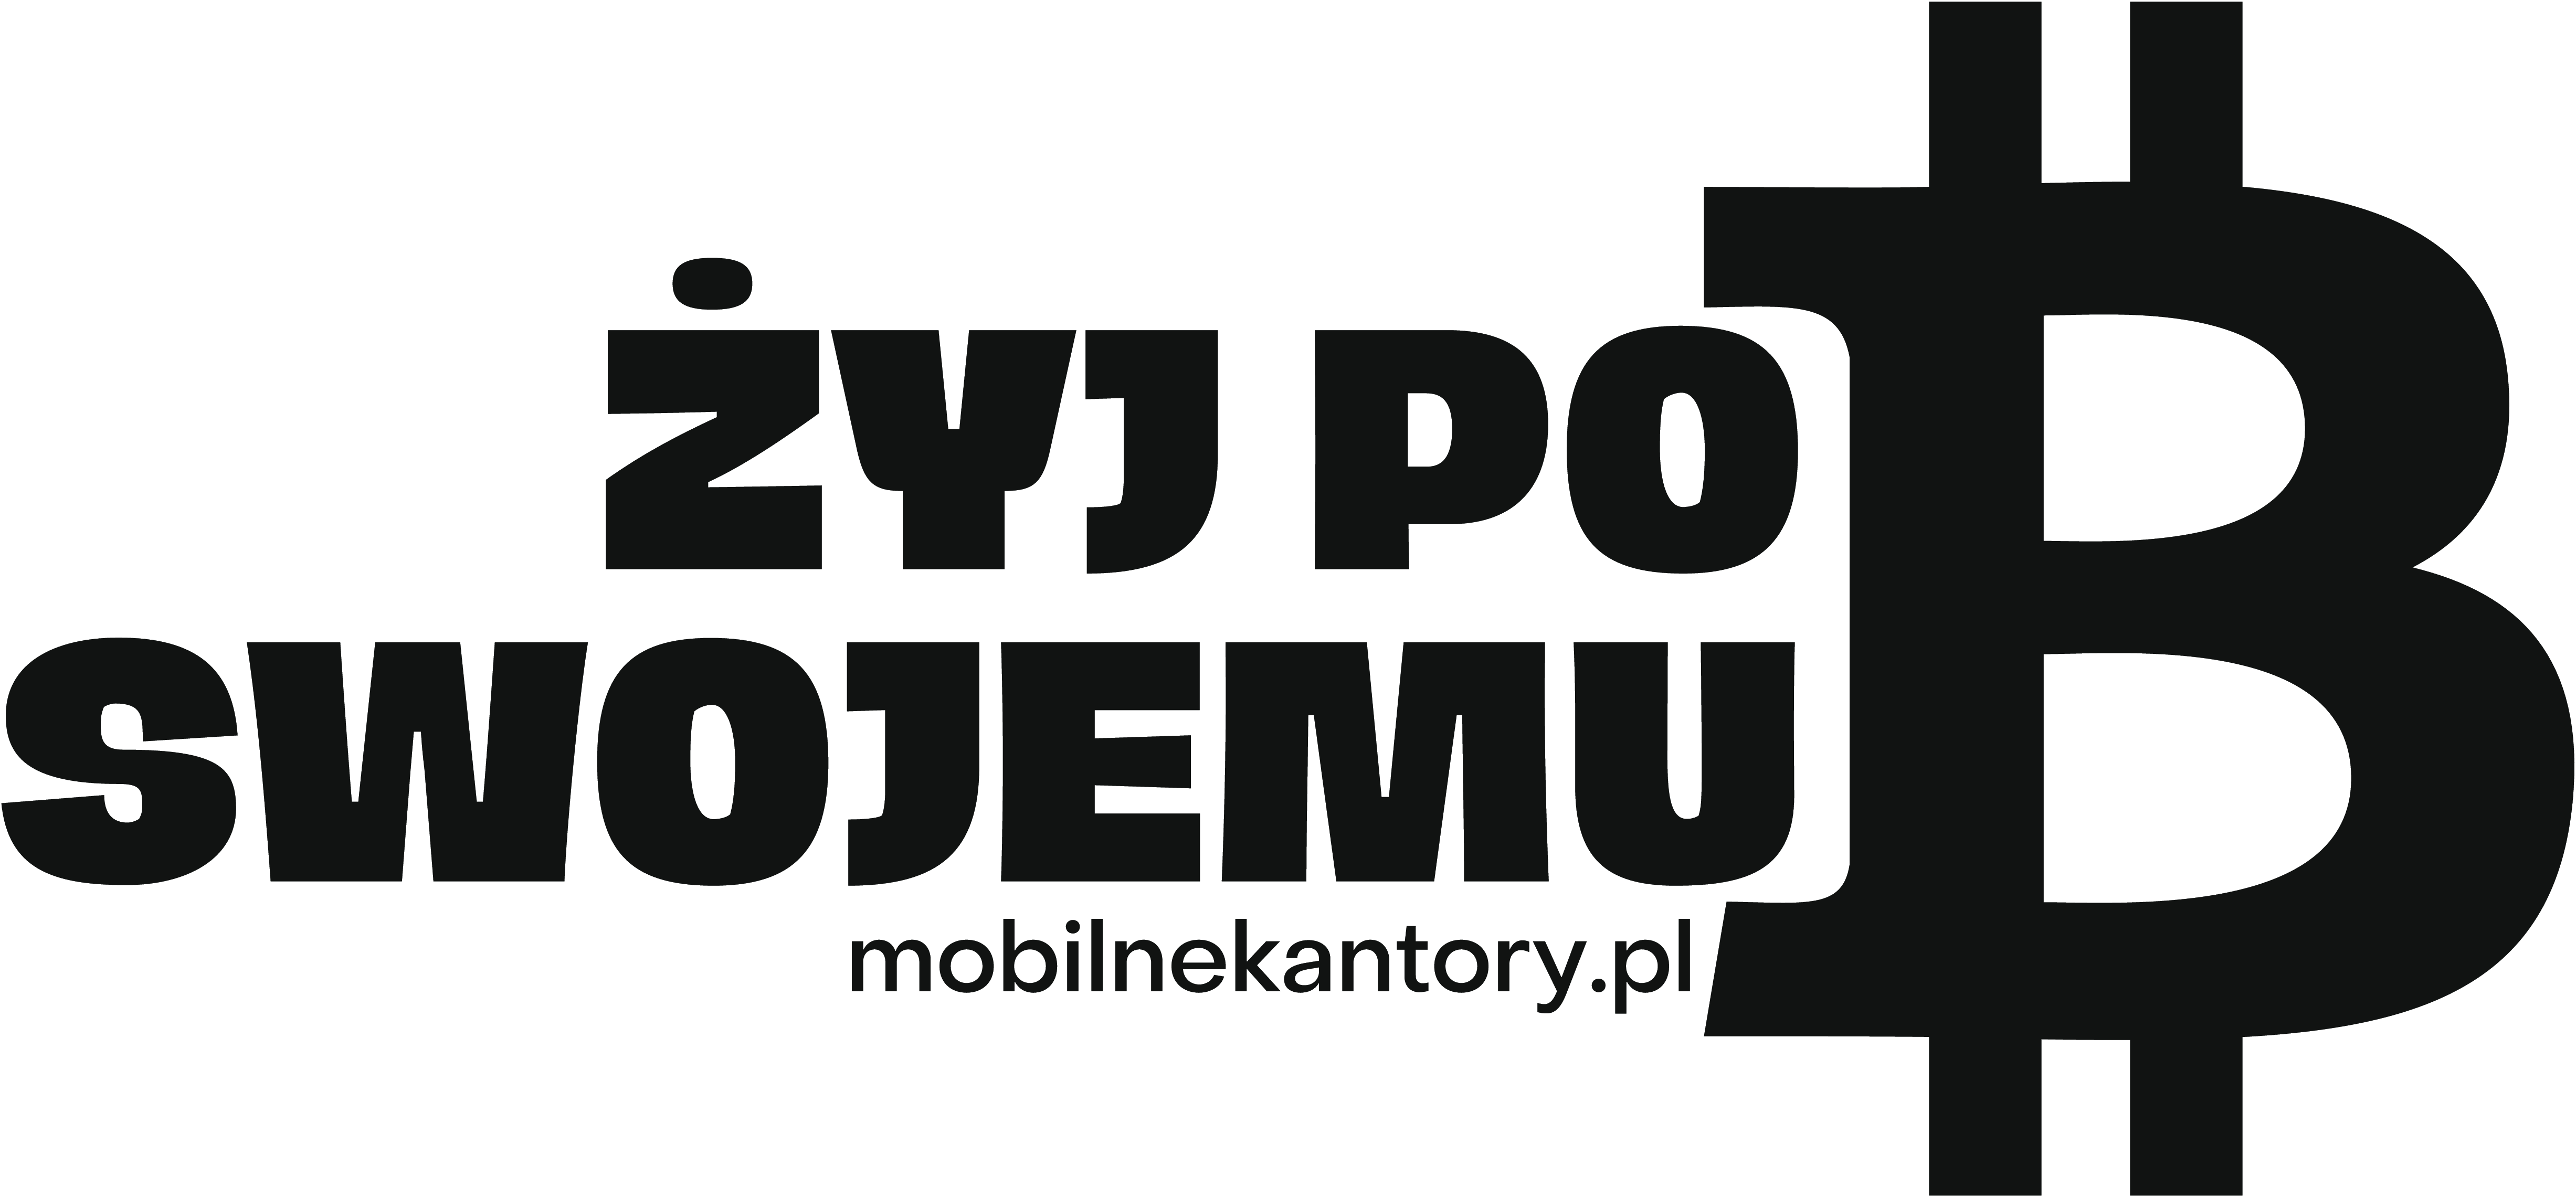 mobilnekantory.pl